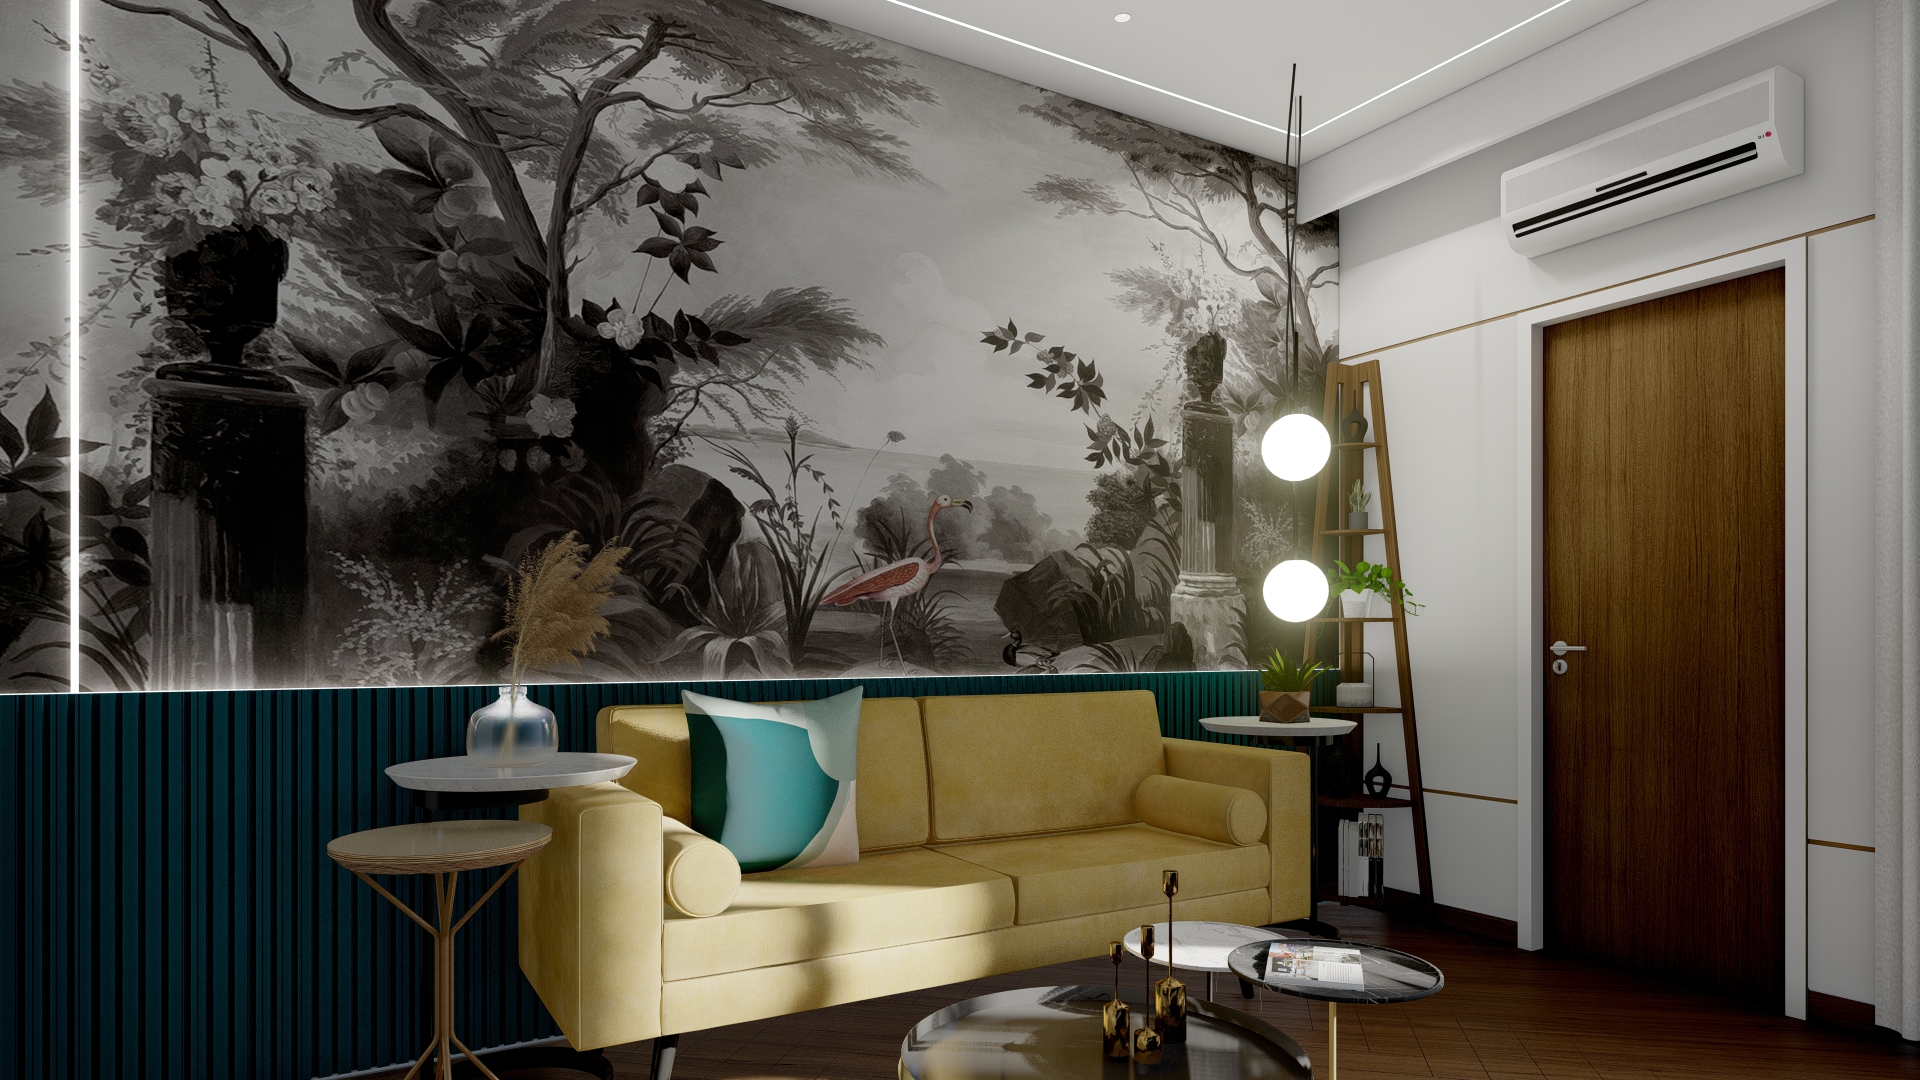 Wallpaper Design in Living Room